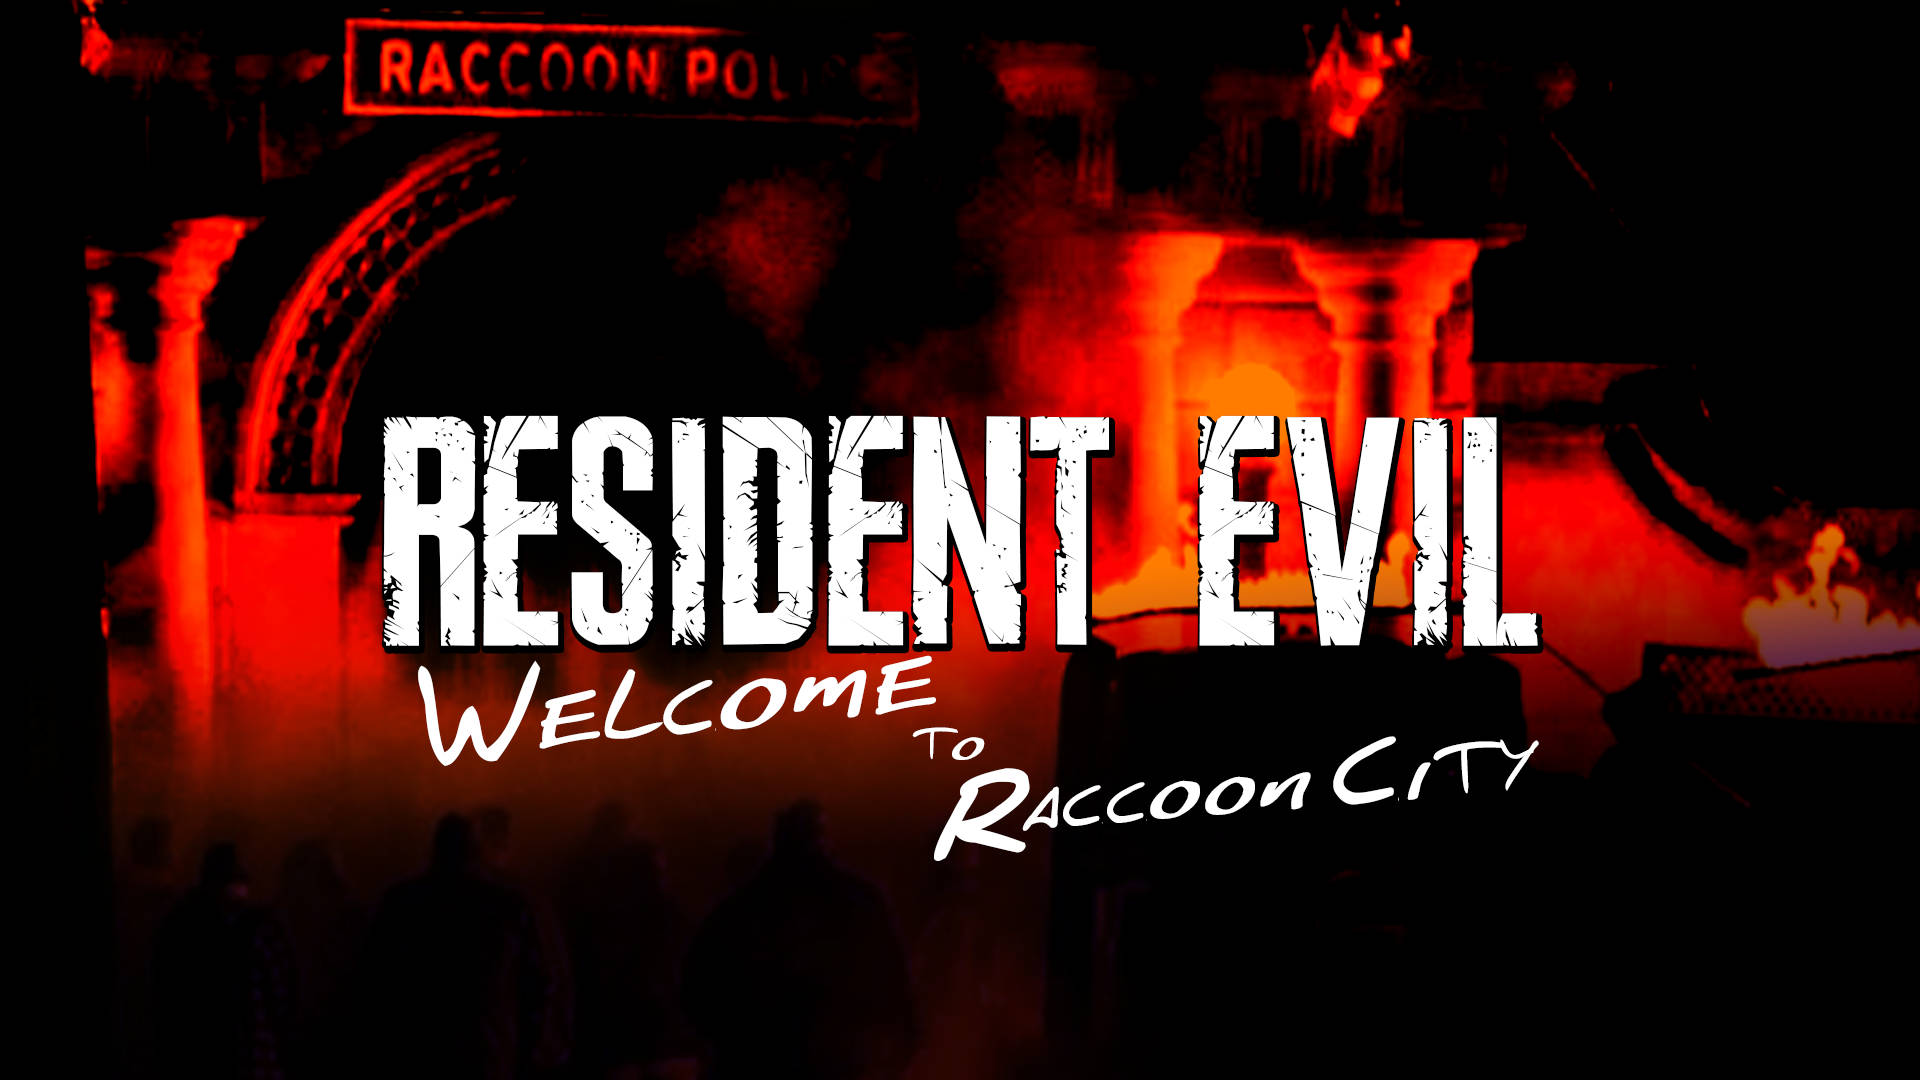 Residentevil Bem-vindo A Raccoon City Monocromático. Papel de Parede